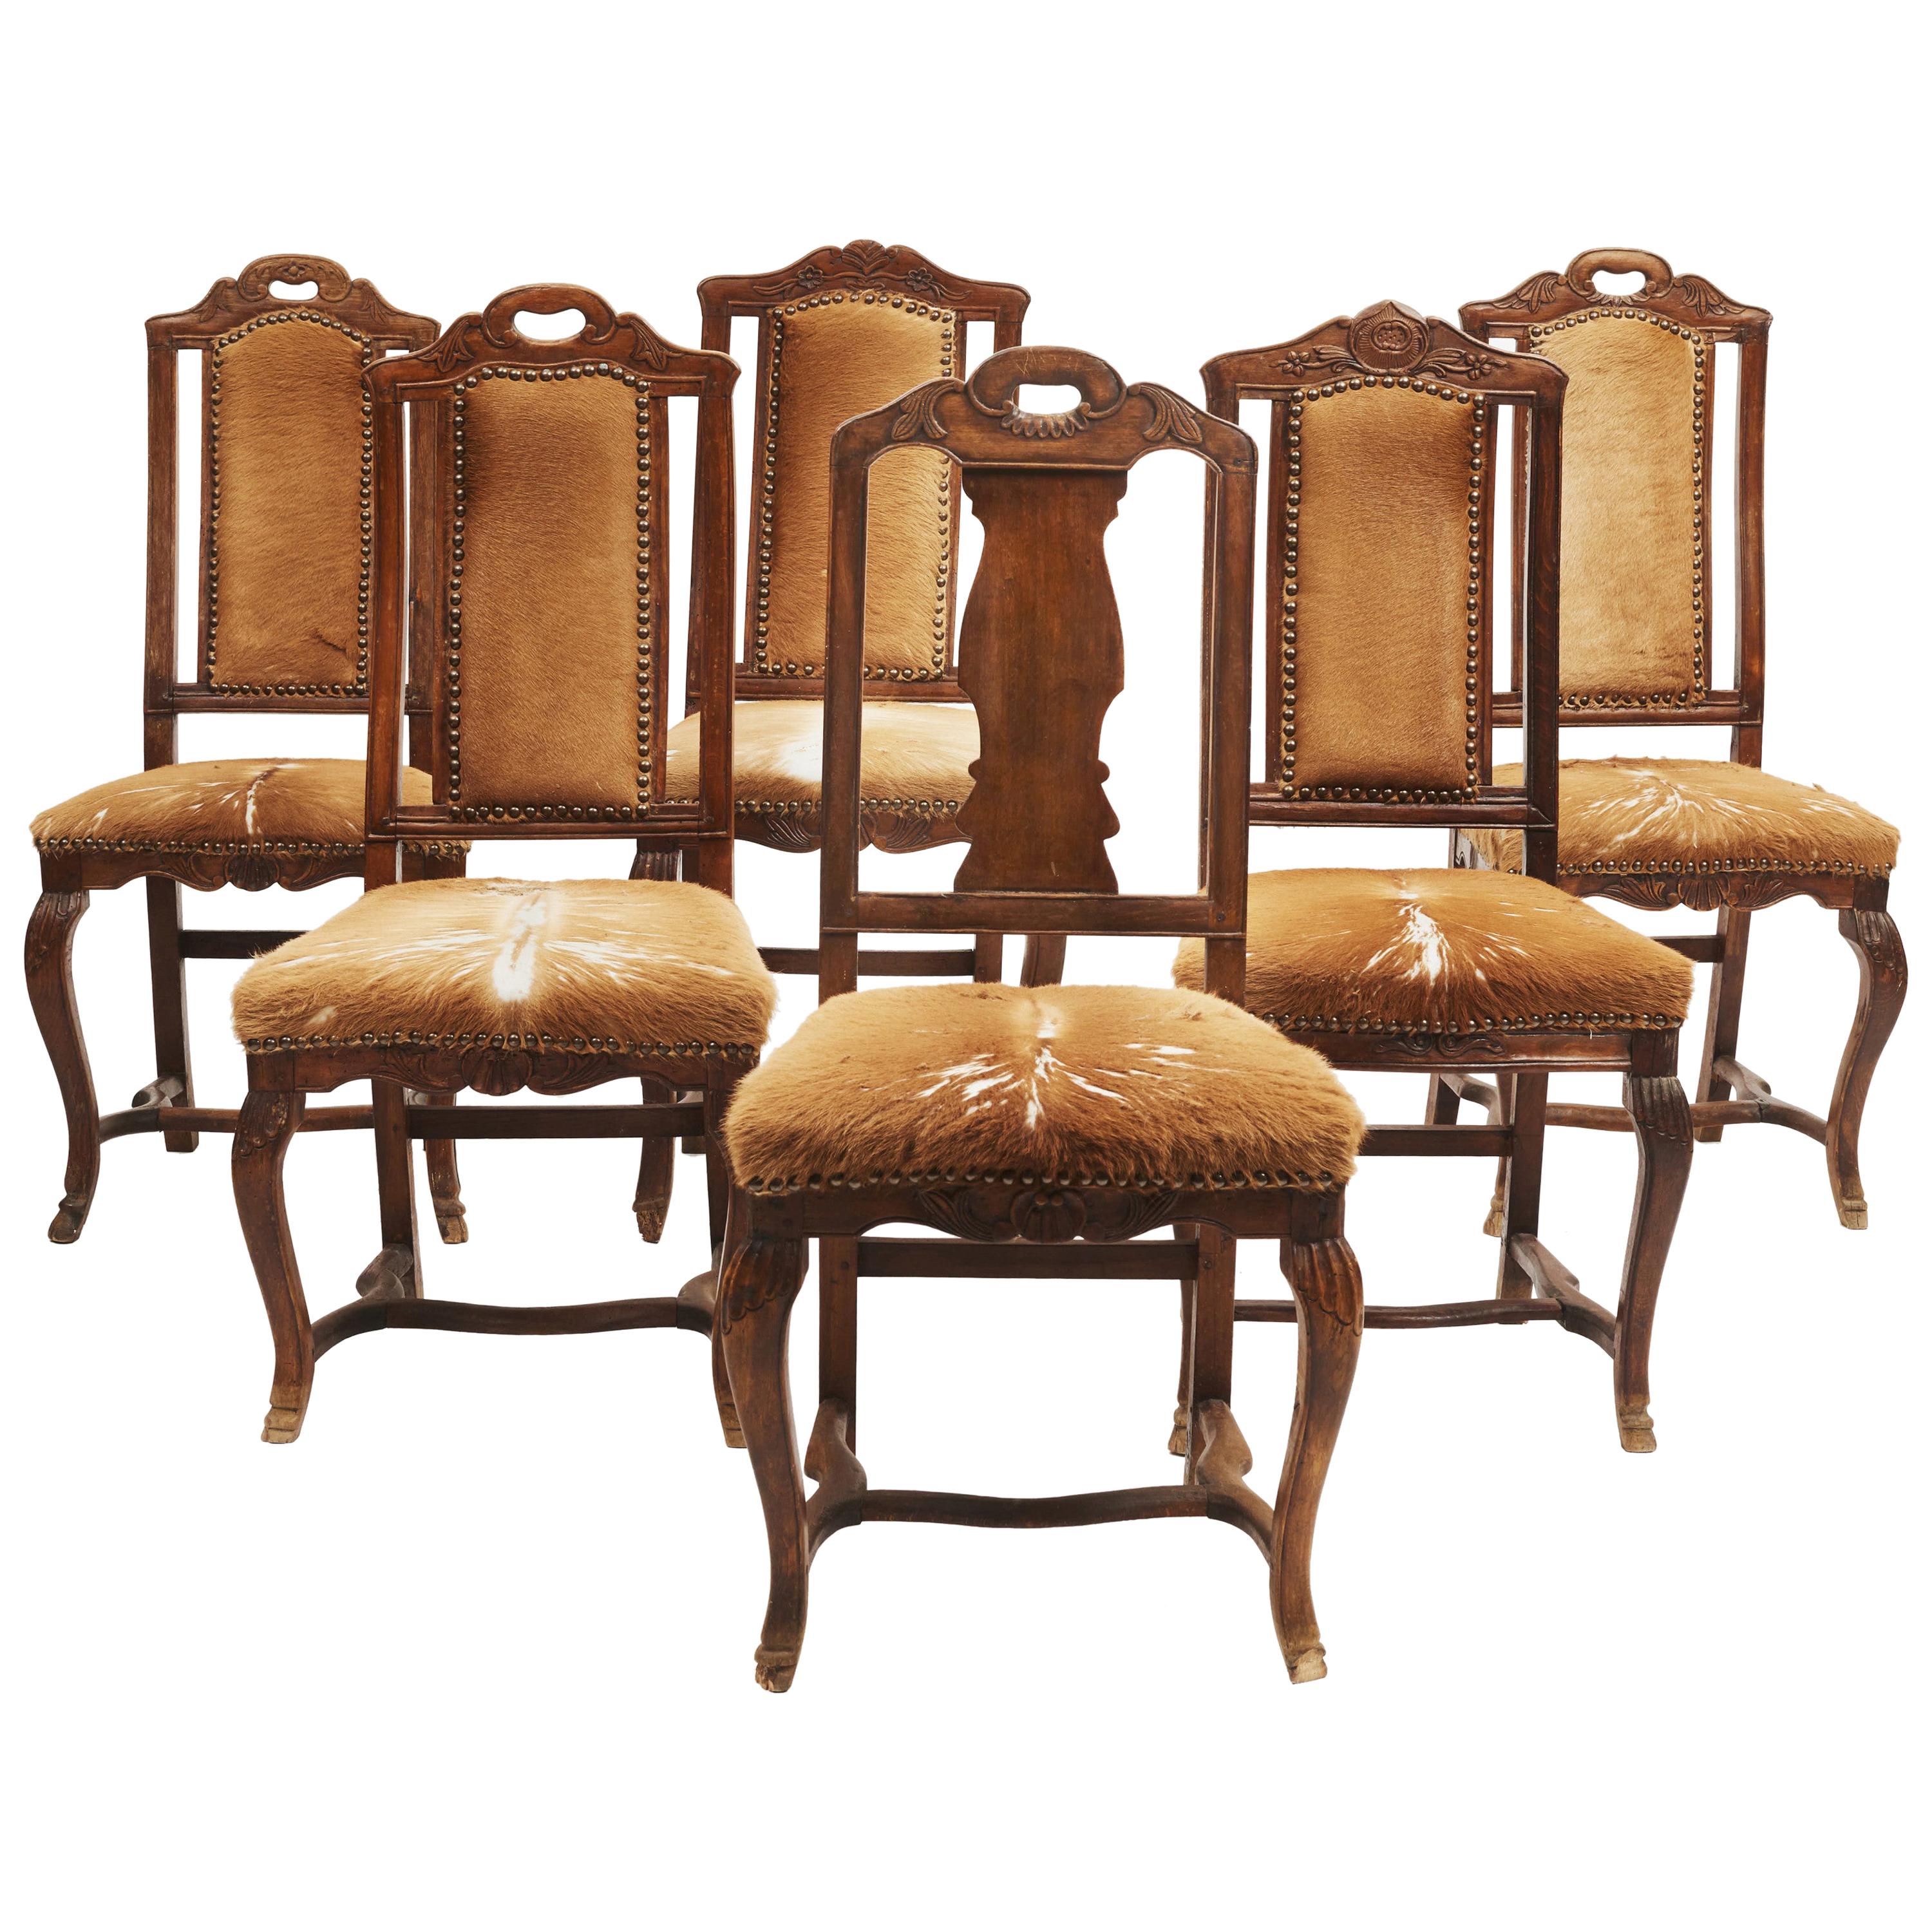 Set of 6 Antique Danish Regence Chairs